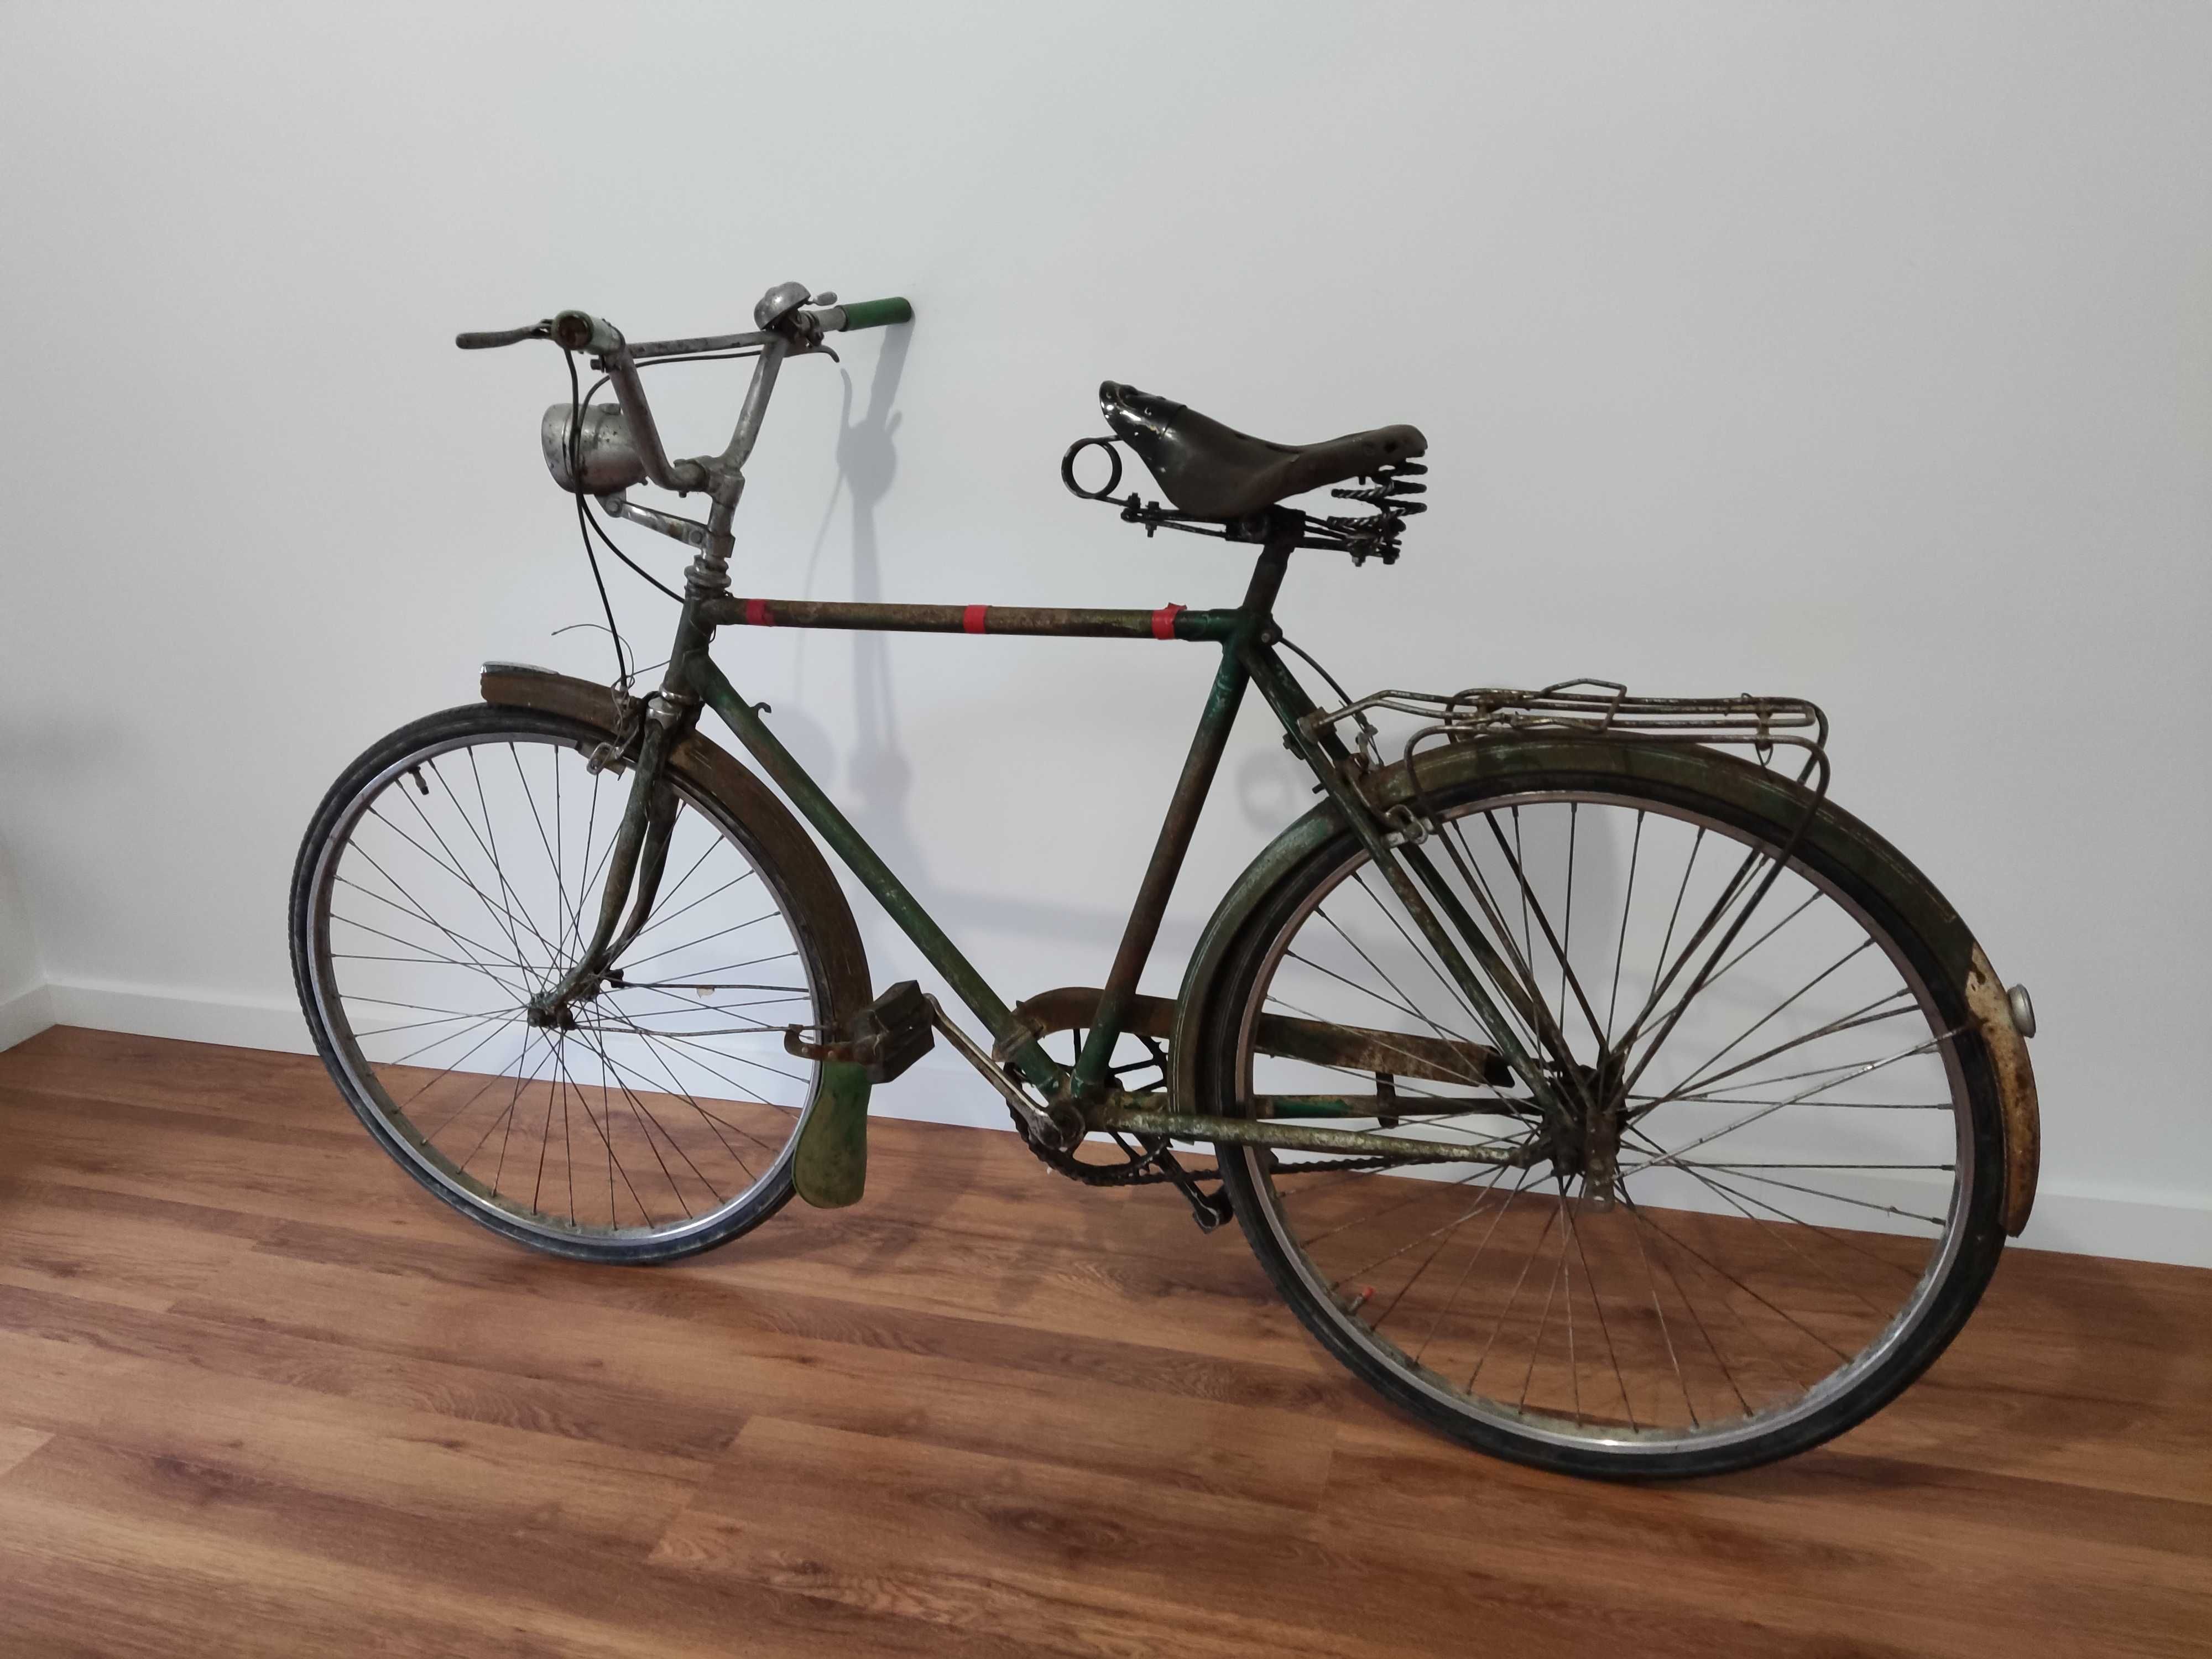 Bicicleta antiga sem toda restaurada